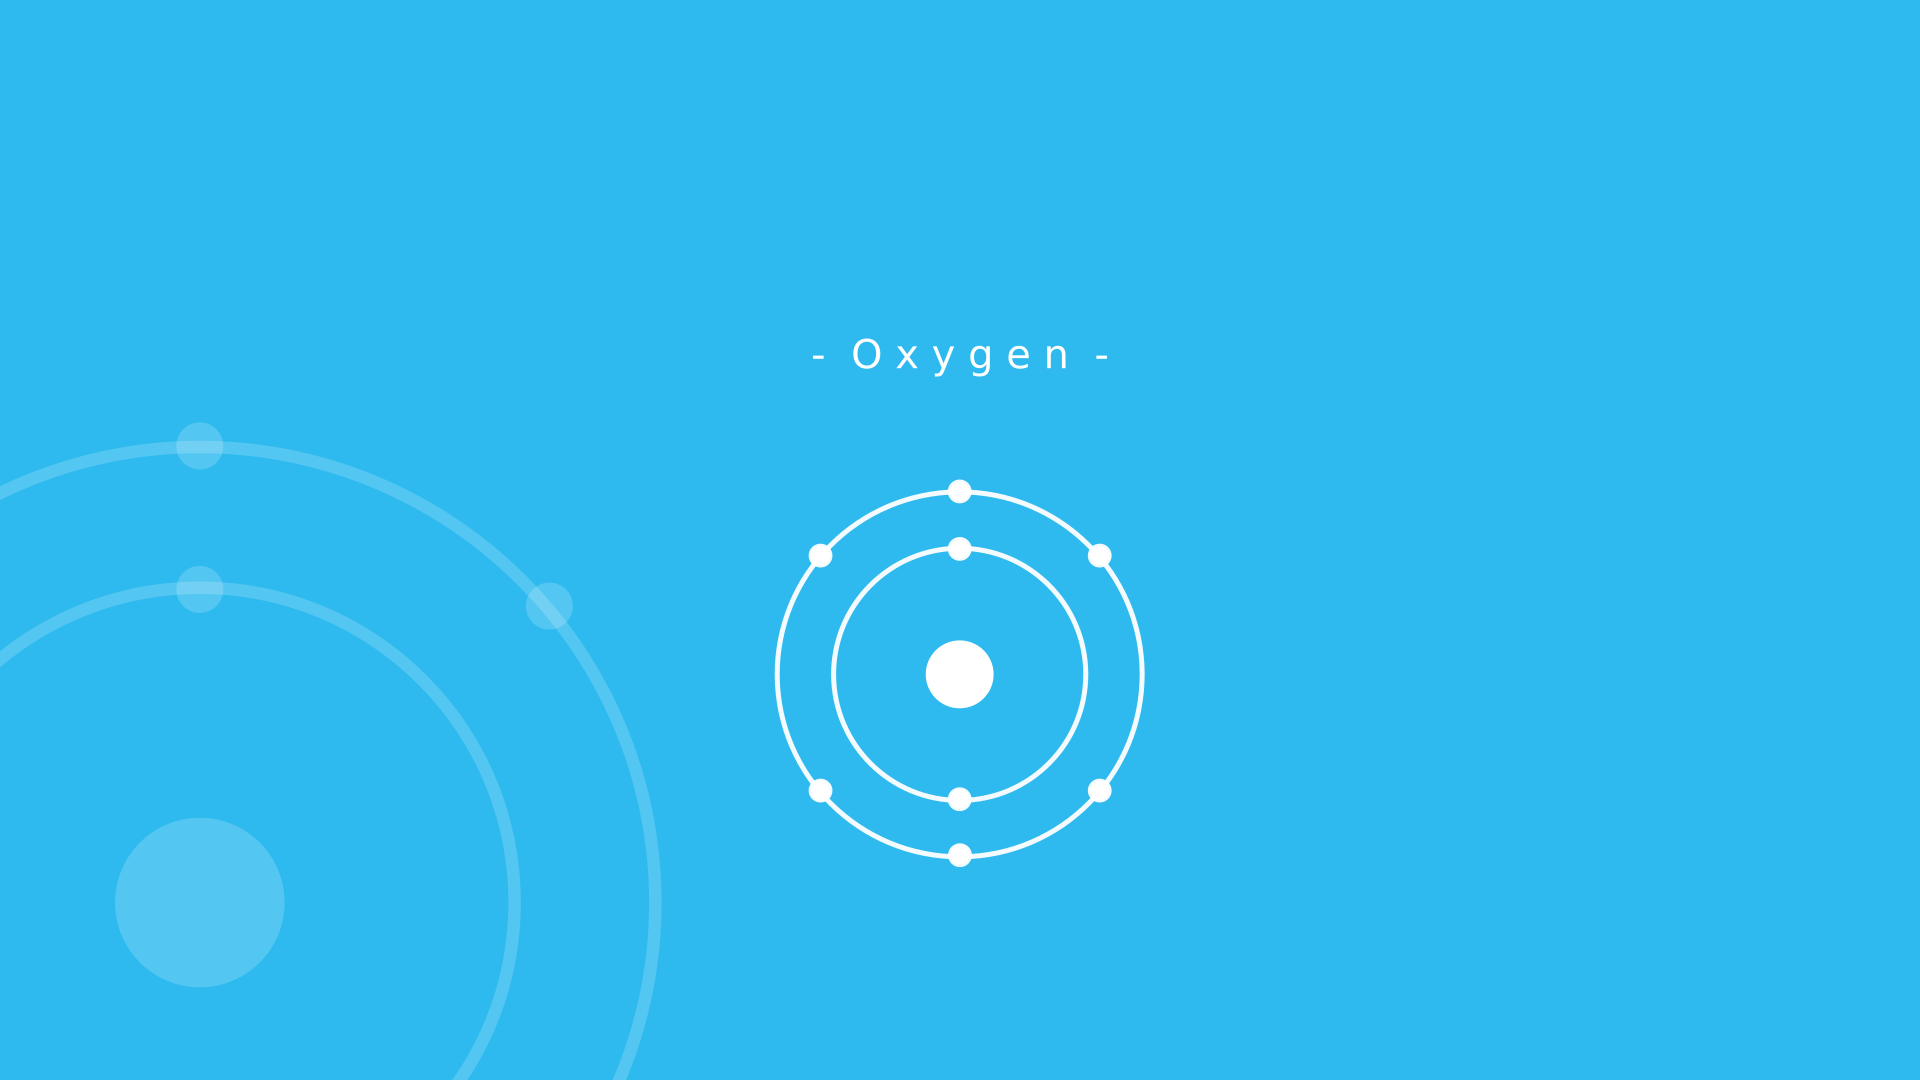 So I Made A Minimalist Oxygen Wallpaper Based Off Of U Exohuman15